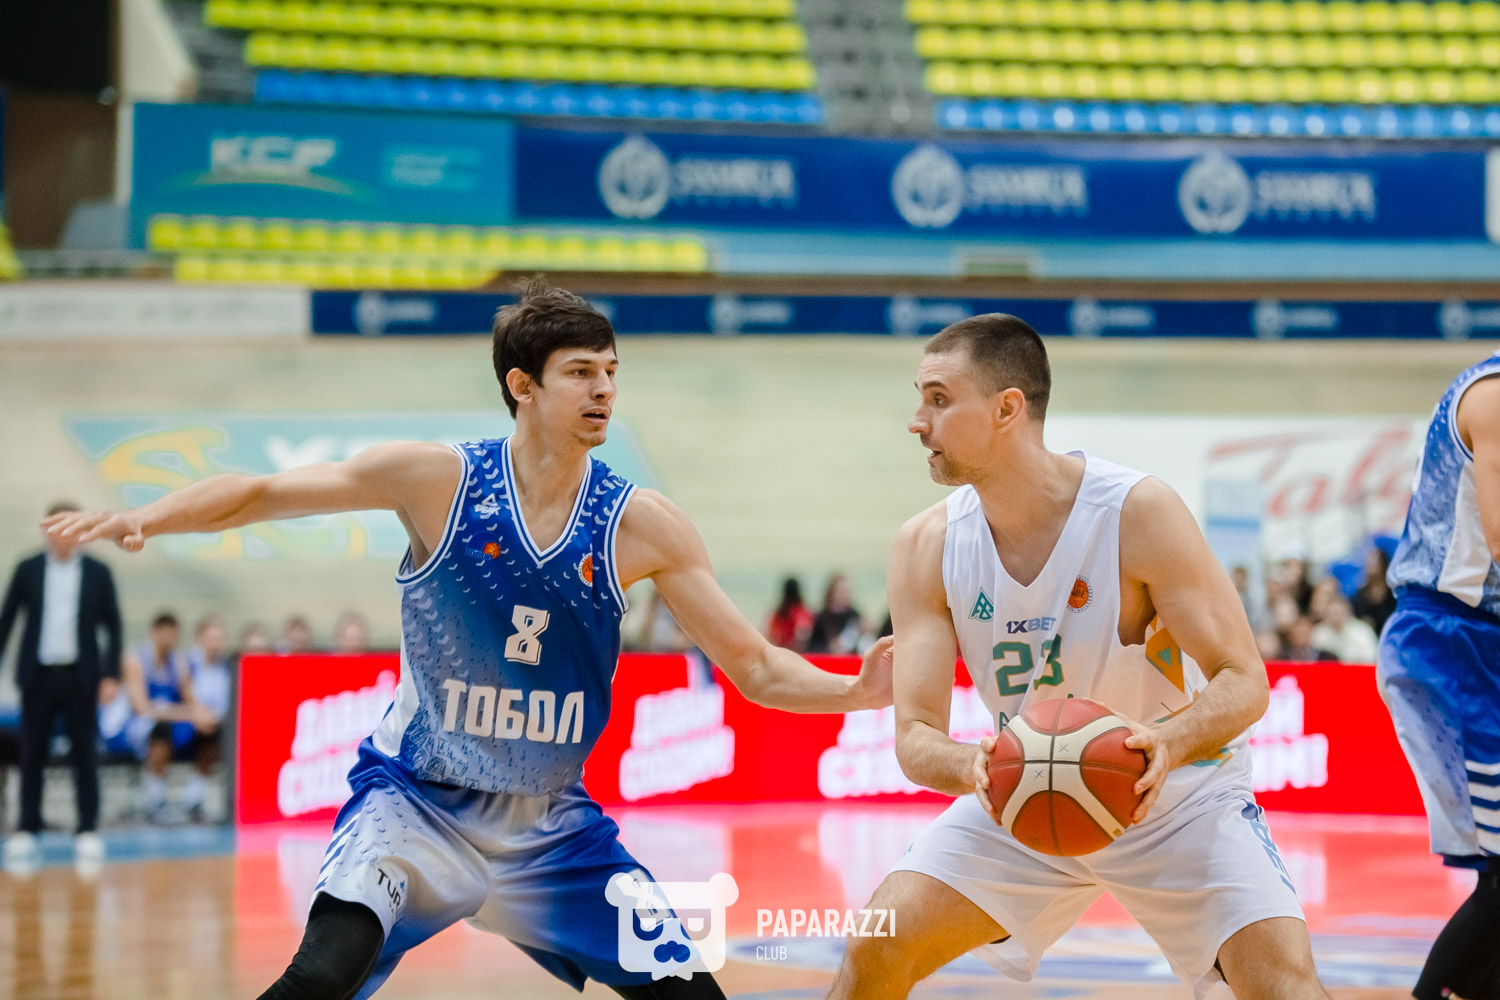 ПБК "Астана"- БК "Тобол" (Костанай). Баскетбол. Национальная лига